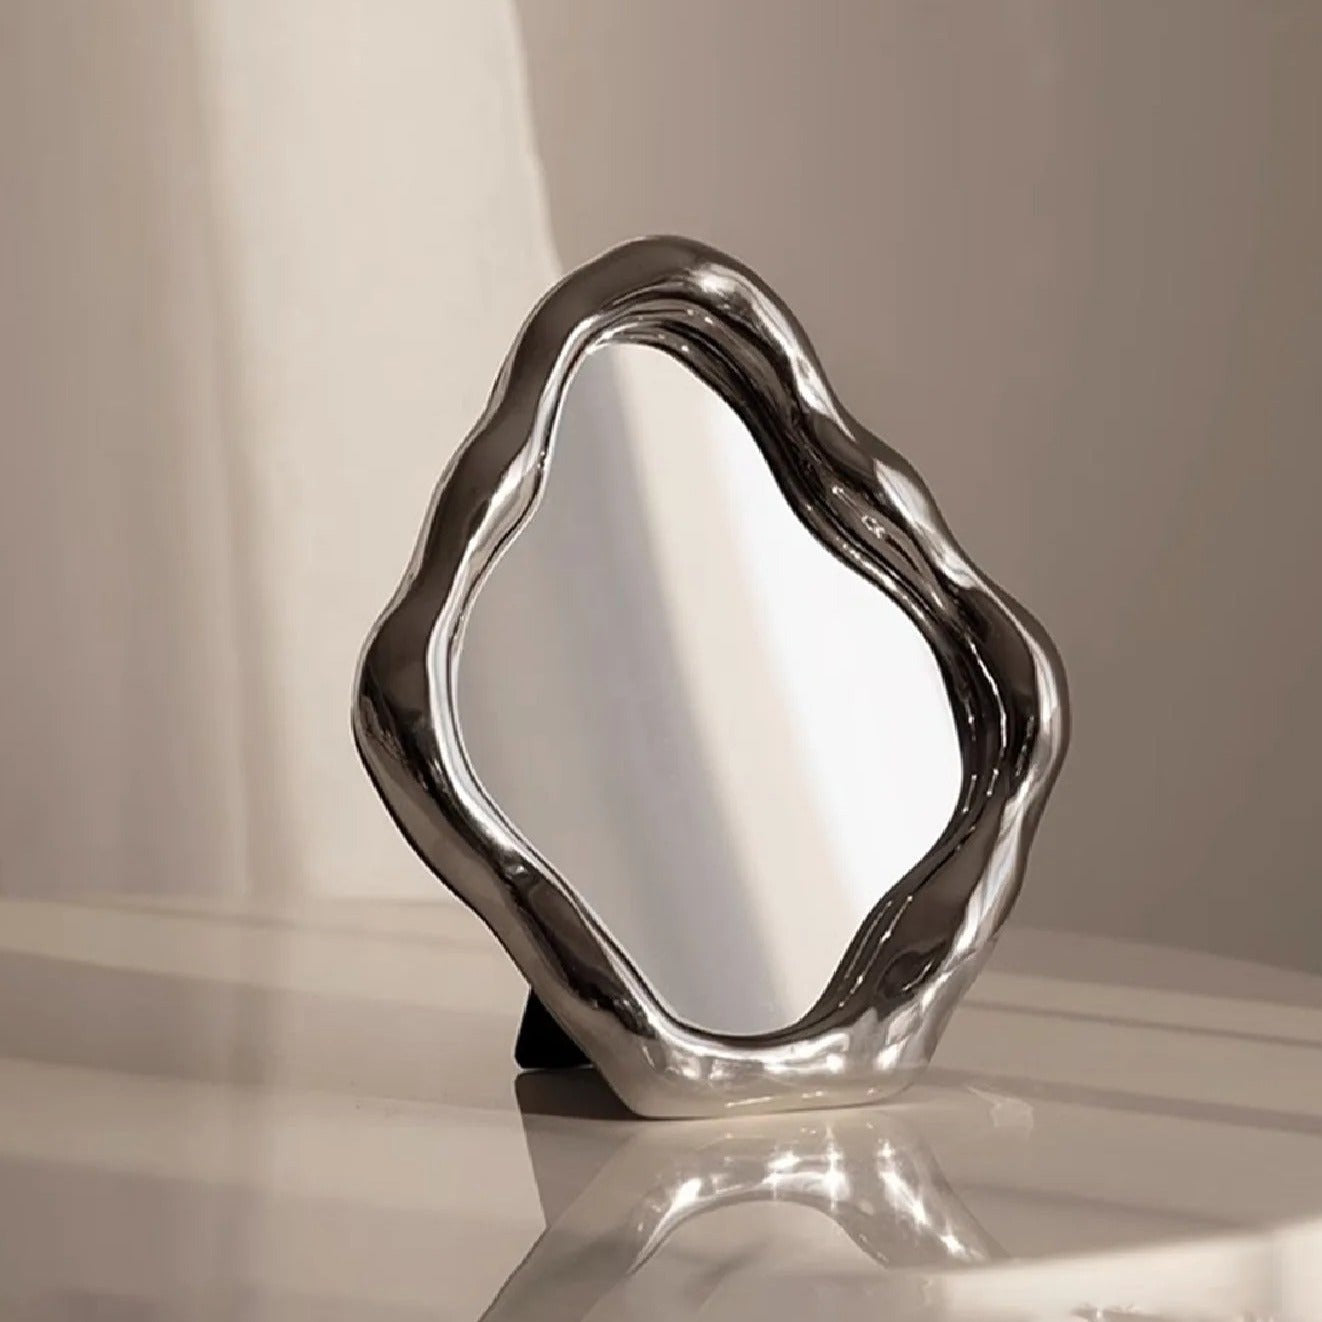 Hologramové zrcadlo | Keramika, sklo